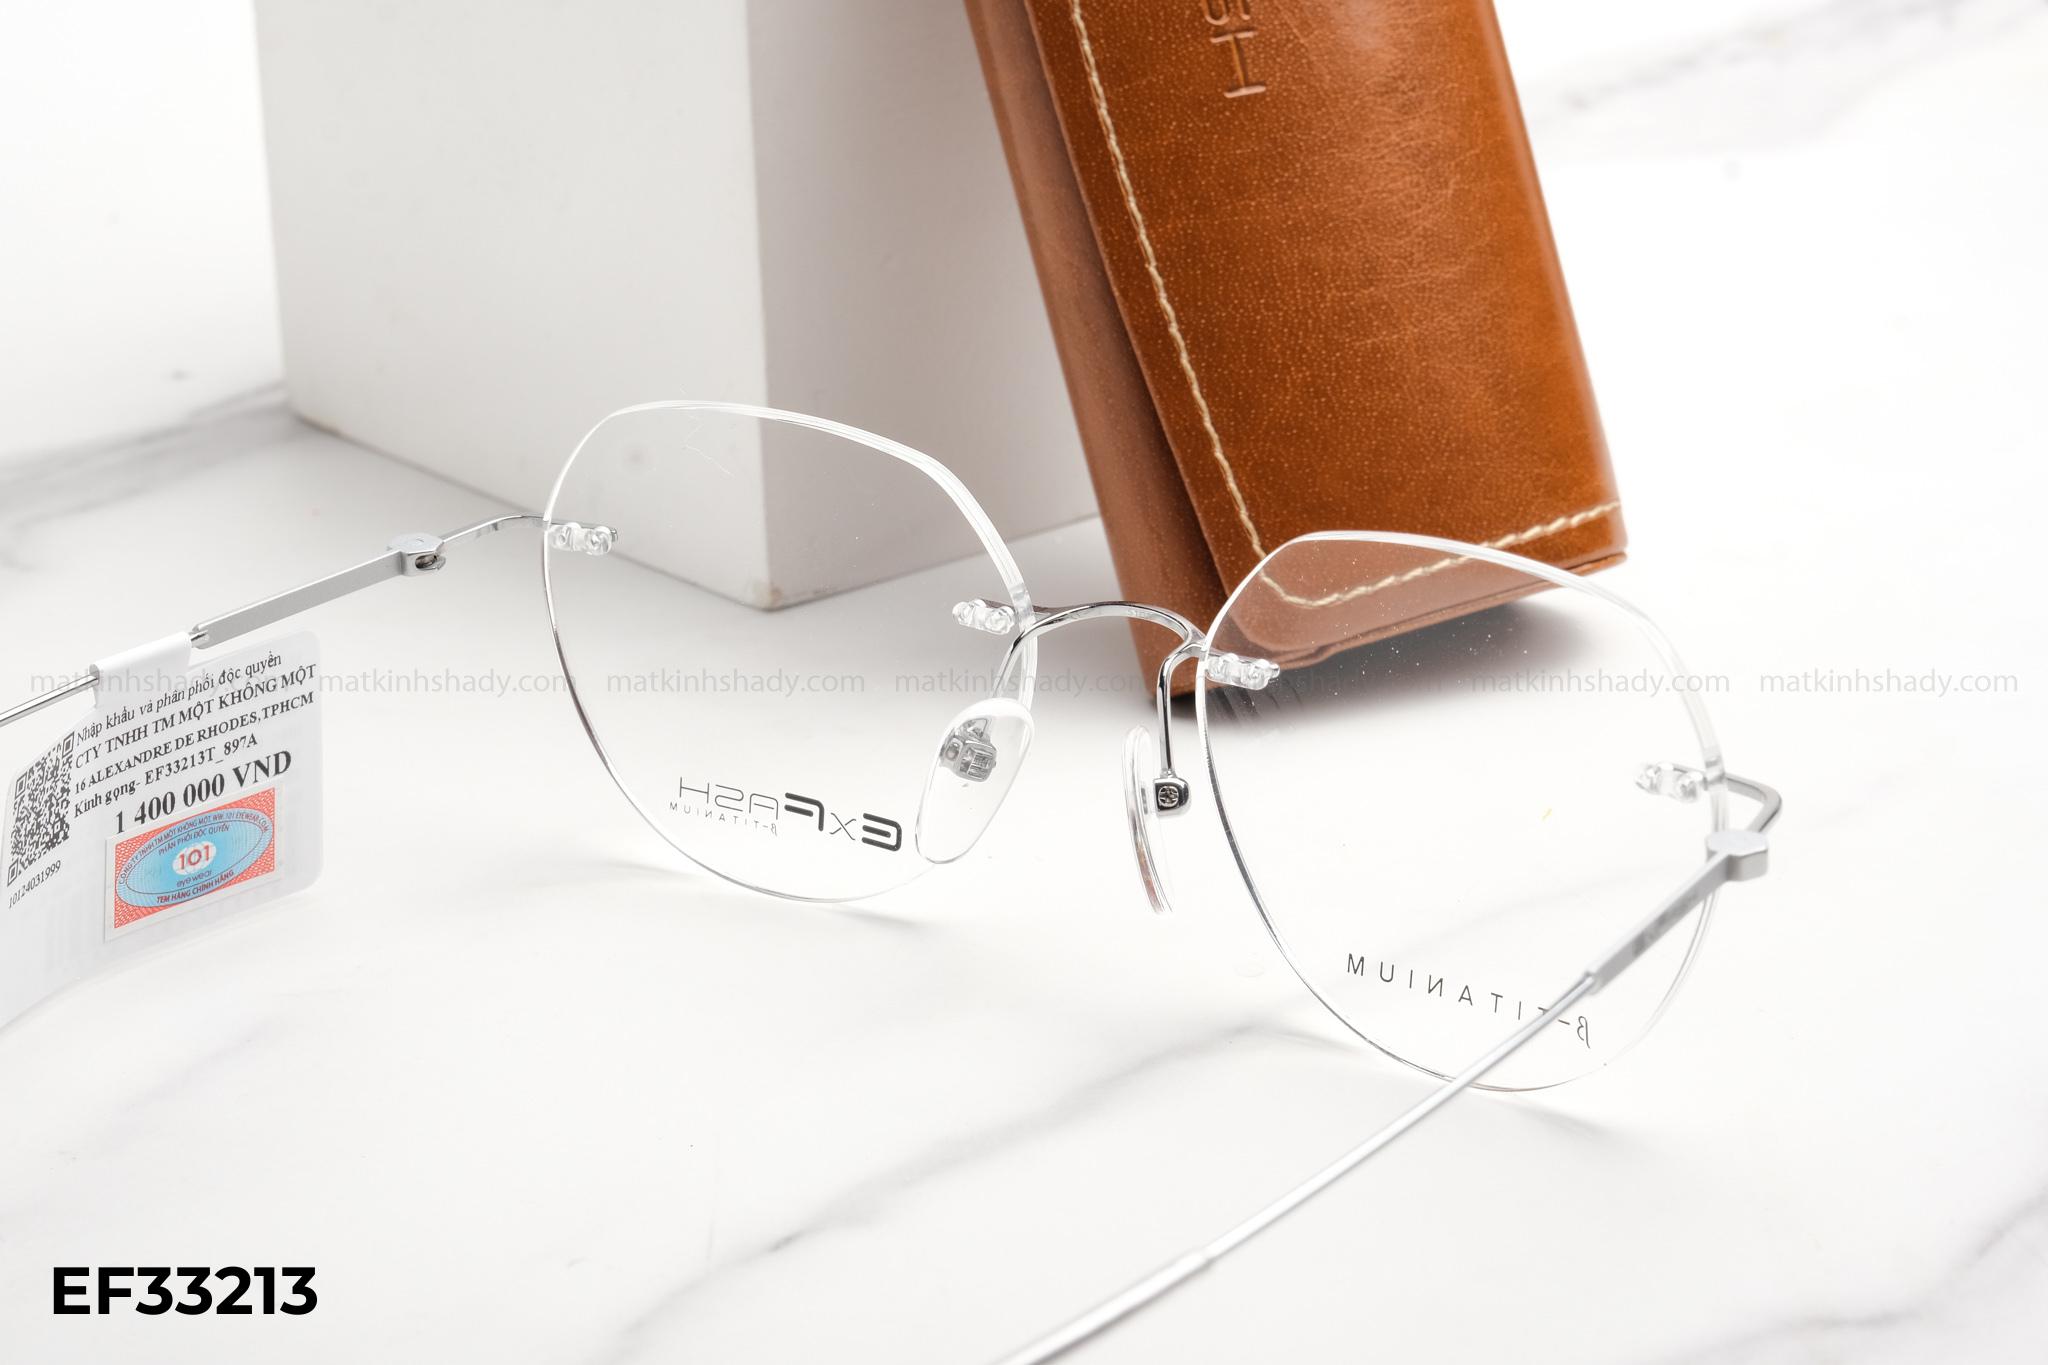  Exfash Eyewear - Glasses - EF33213 